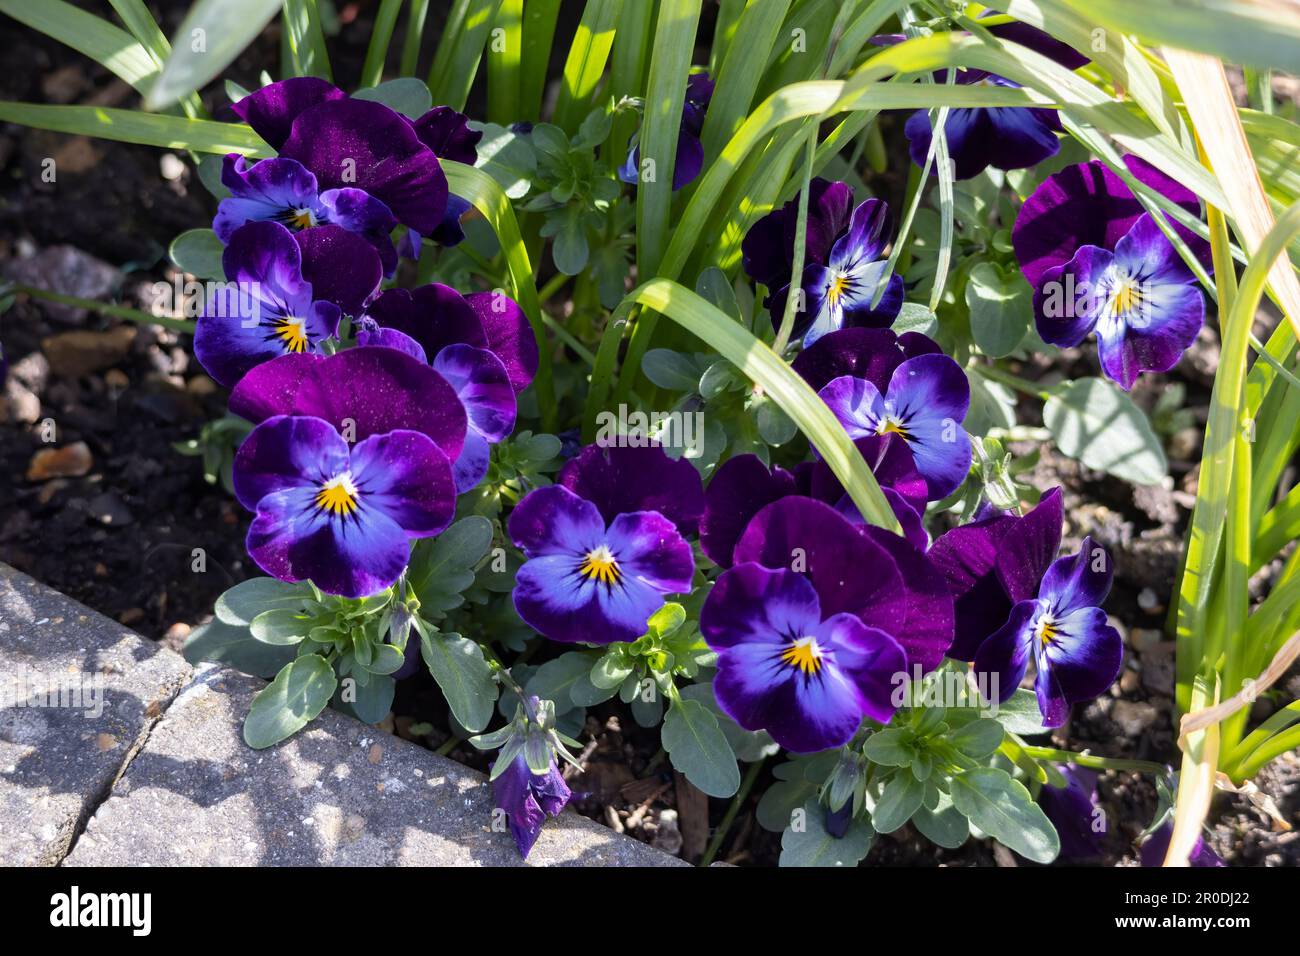 Pansie colorate fiorite nel sole primaverile Foto Stock